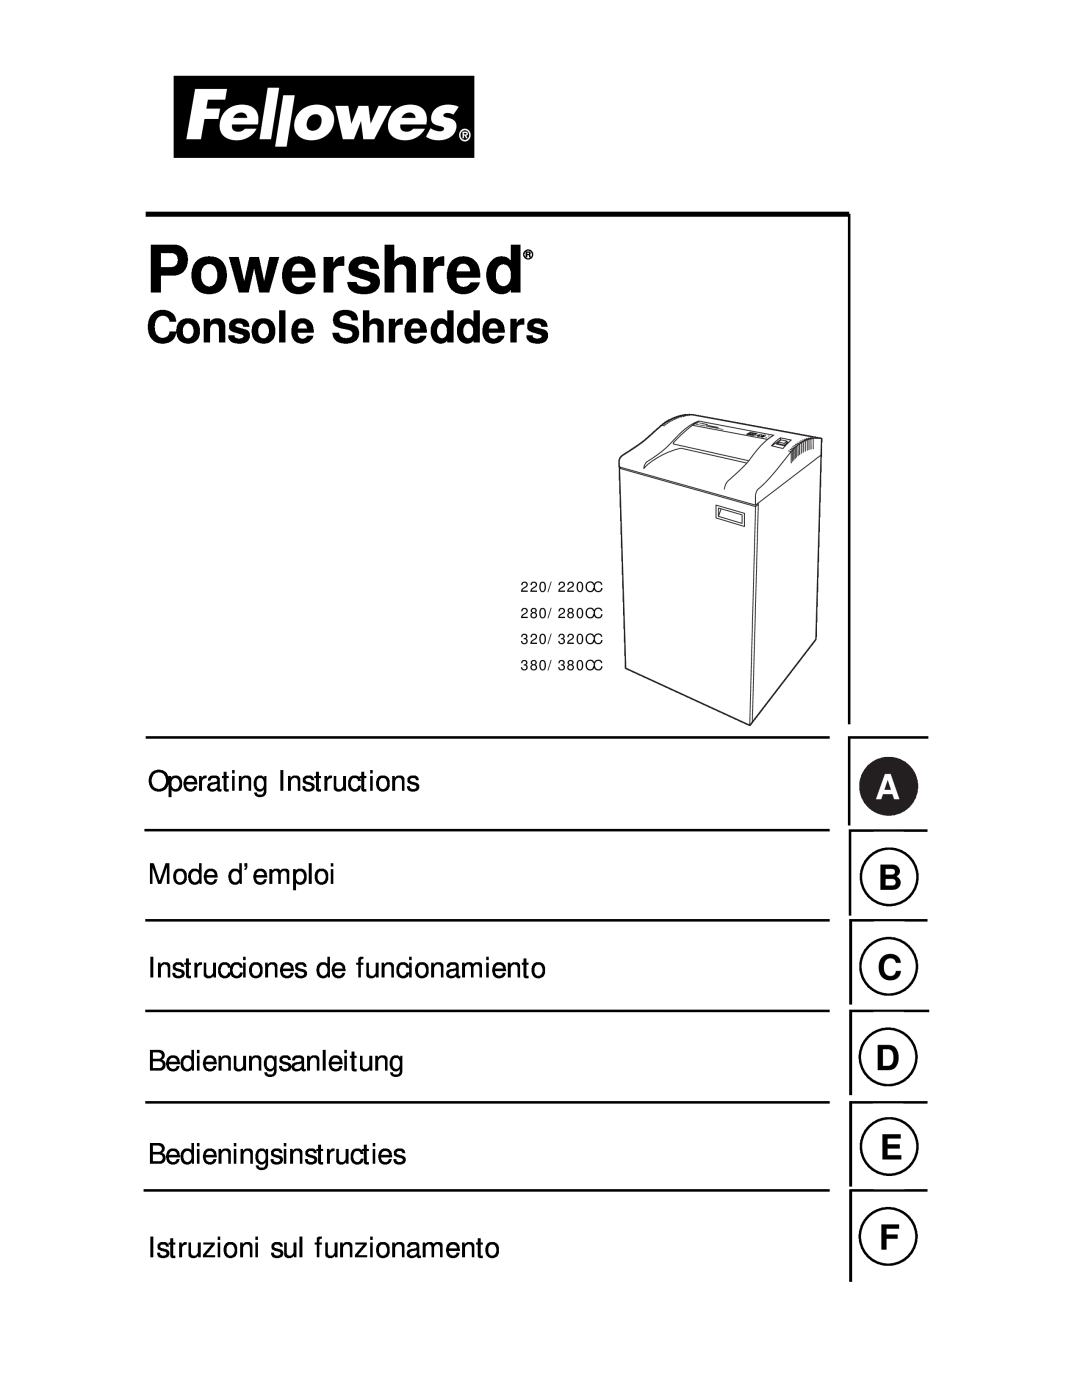 Fellowes operating instructions B C D E F, 220/220CC 280/280CC 320/320CC 380/380CC, Powershred, Console Shredders 